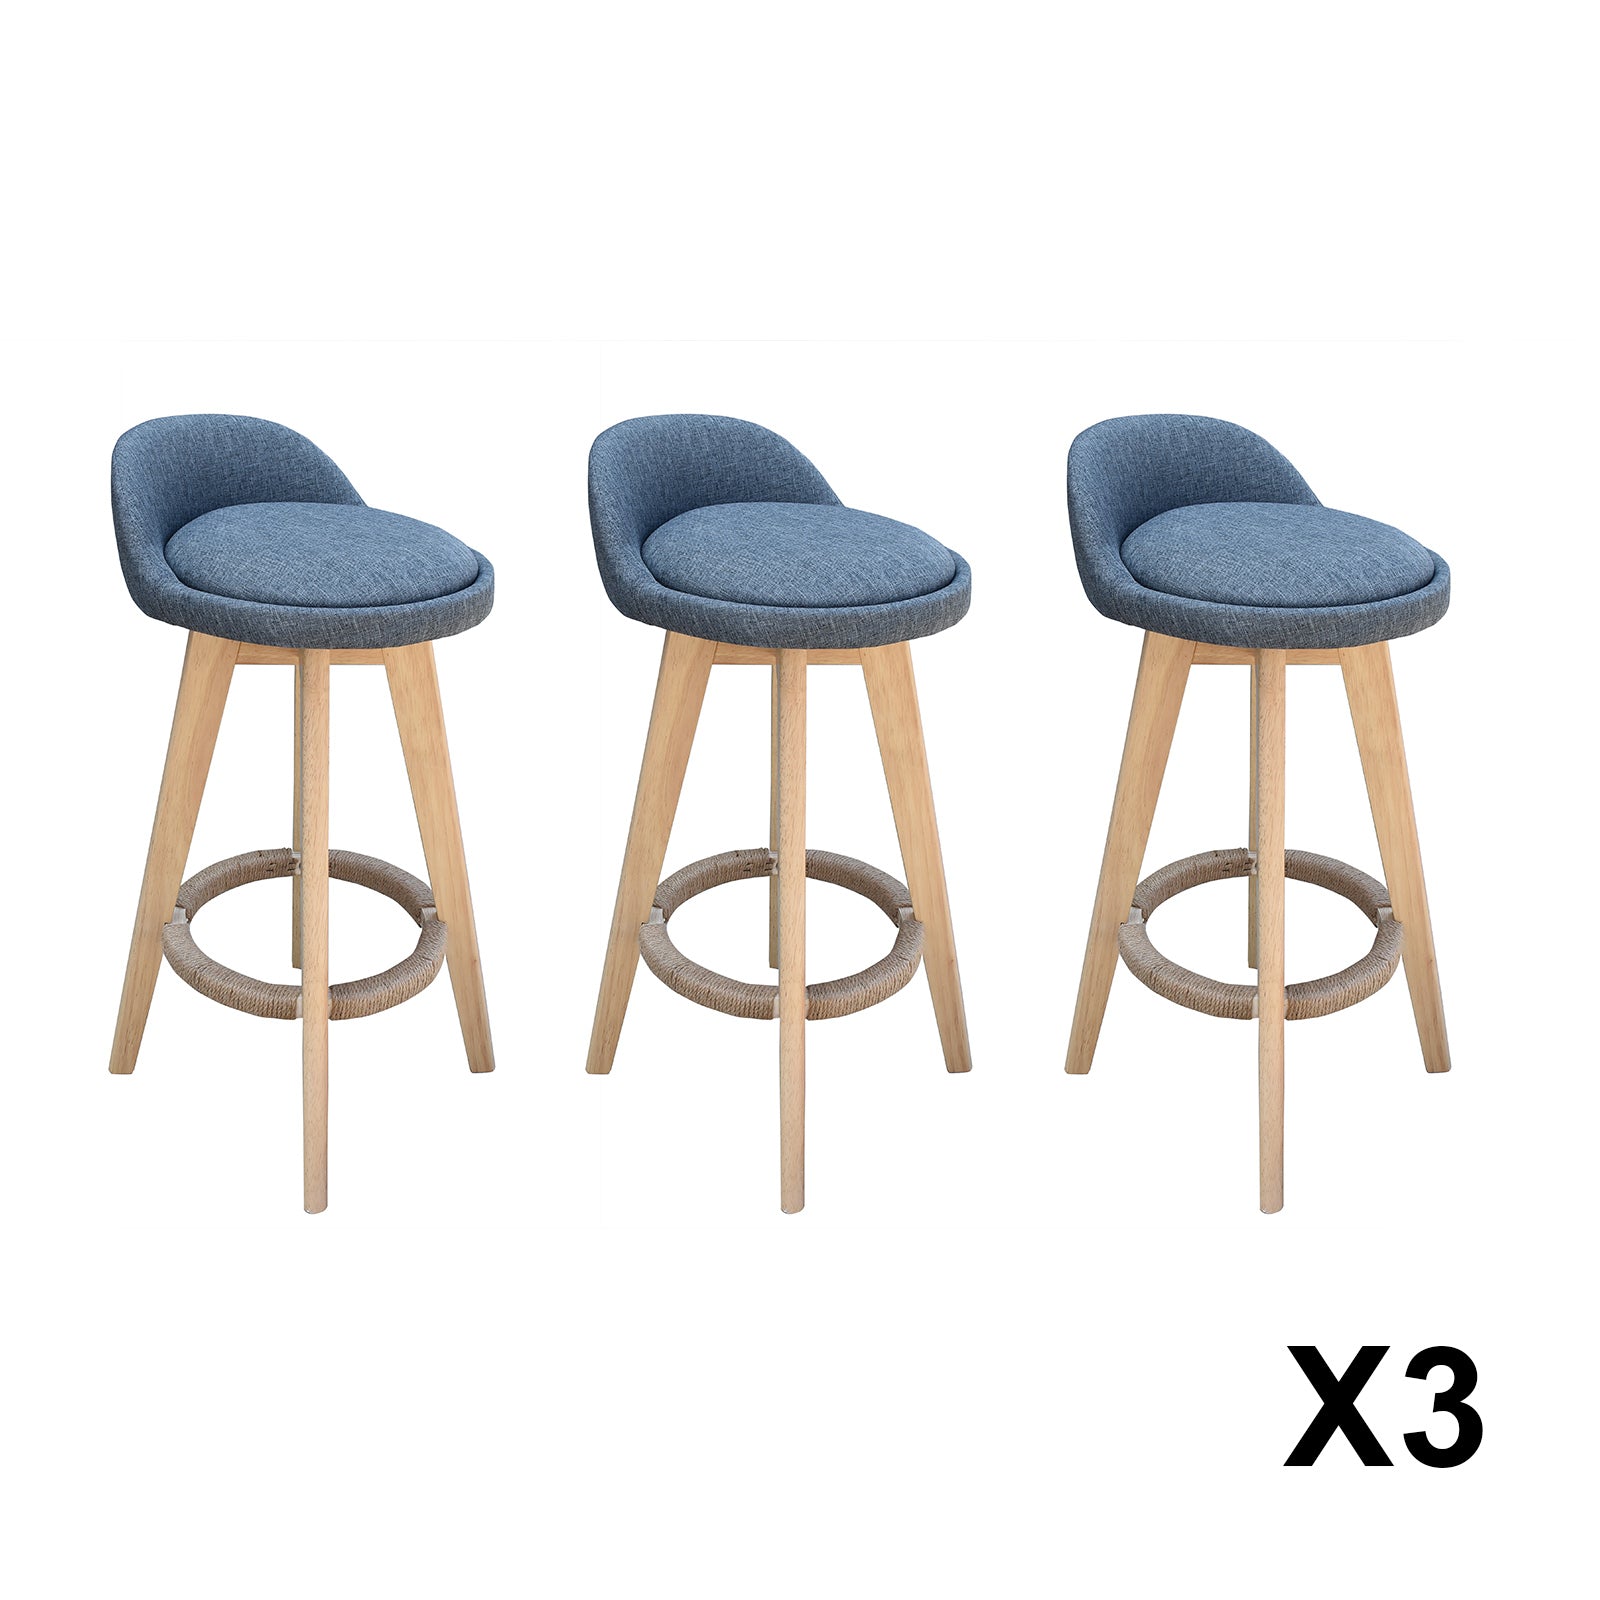 Milano Decor Phoenix Barstool Grey Chairs Kitchen Dining Chair Bar Stool - Three Pack - Grey